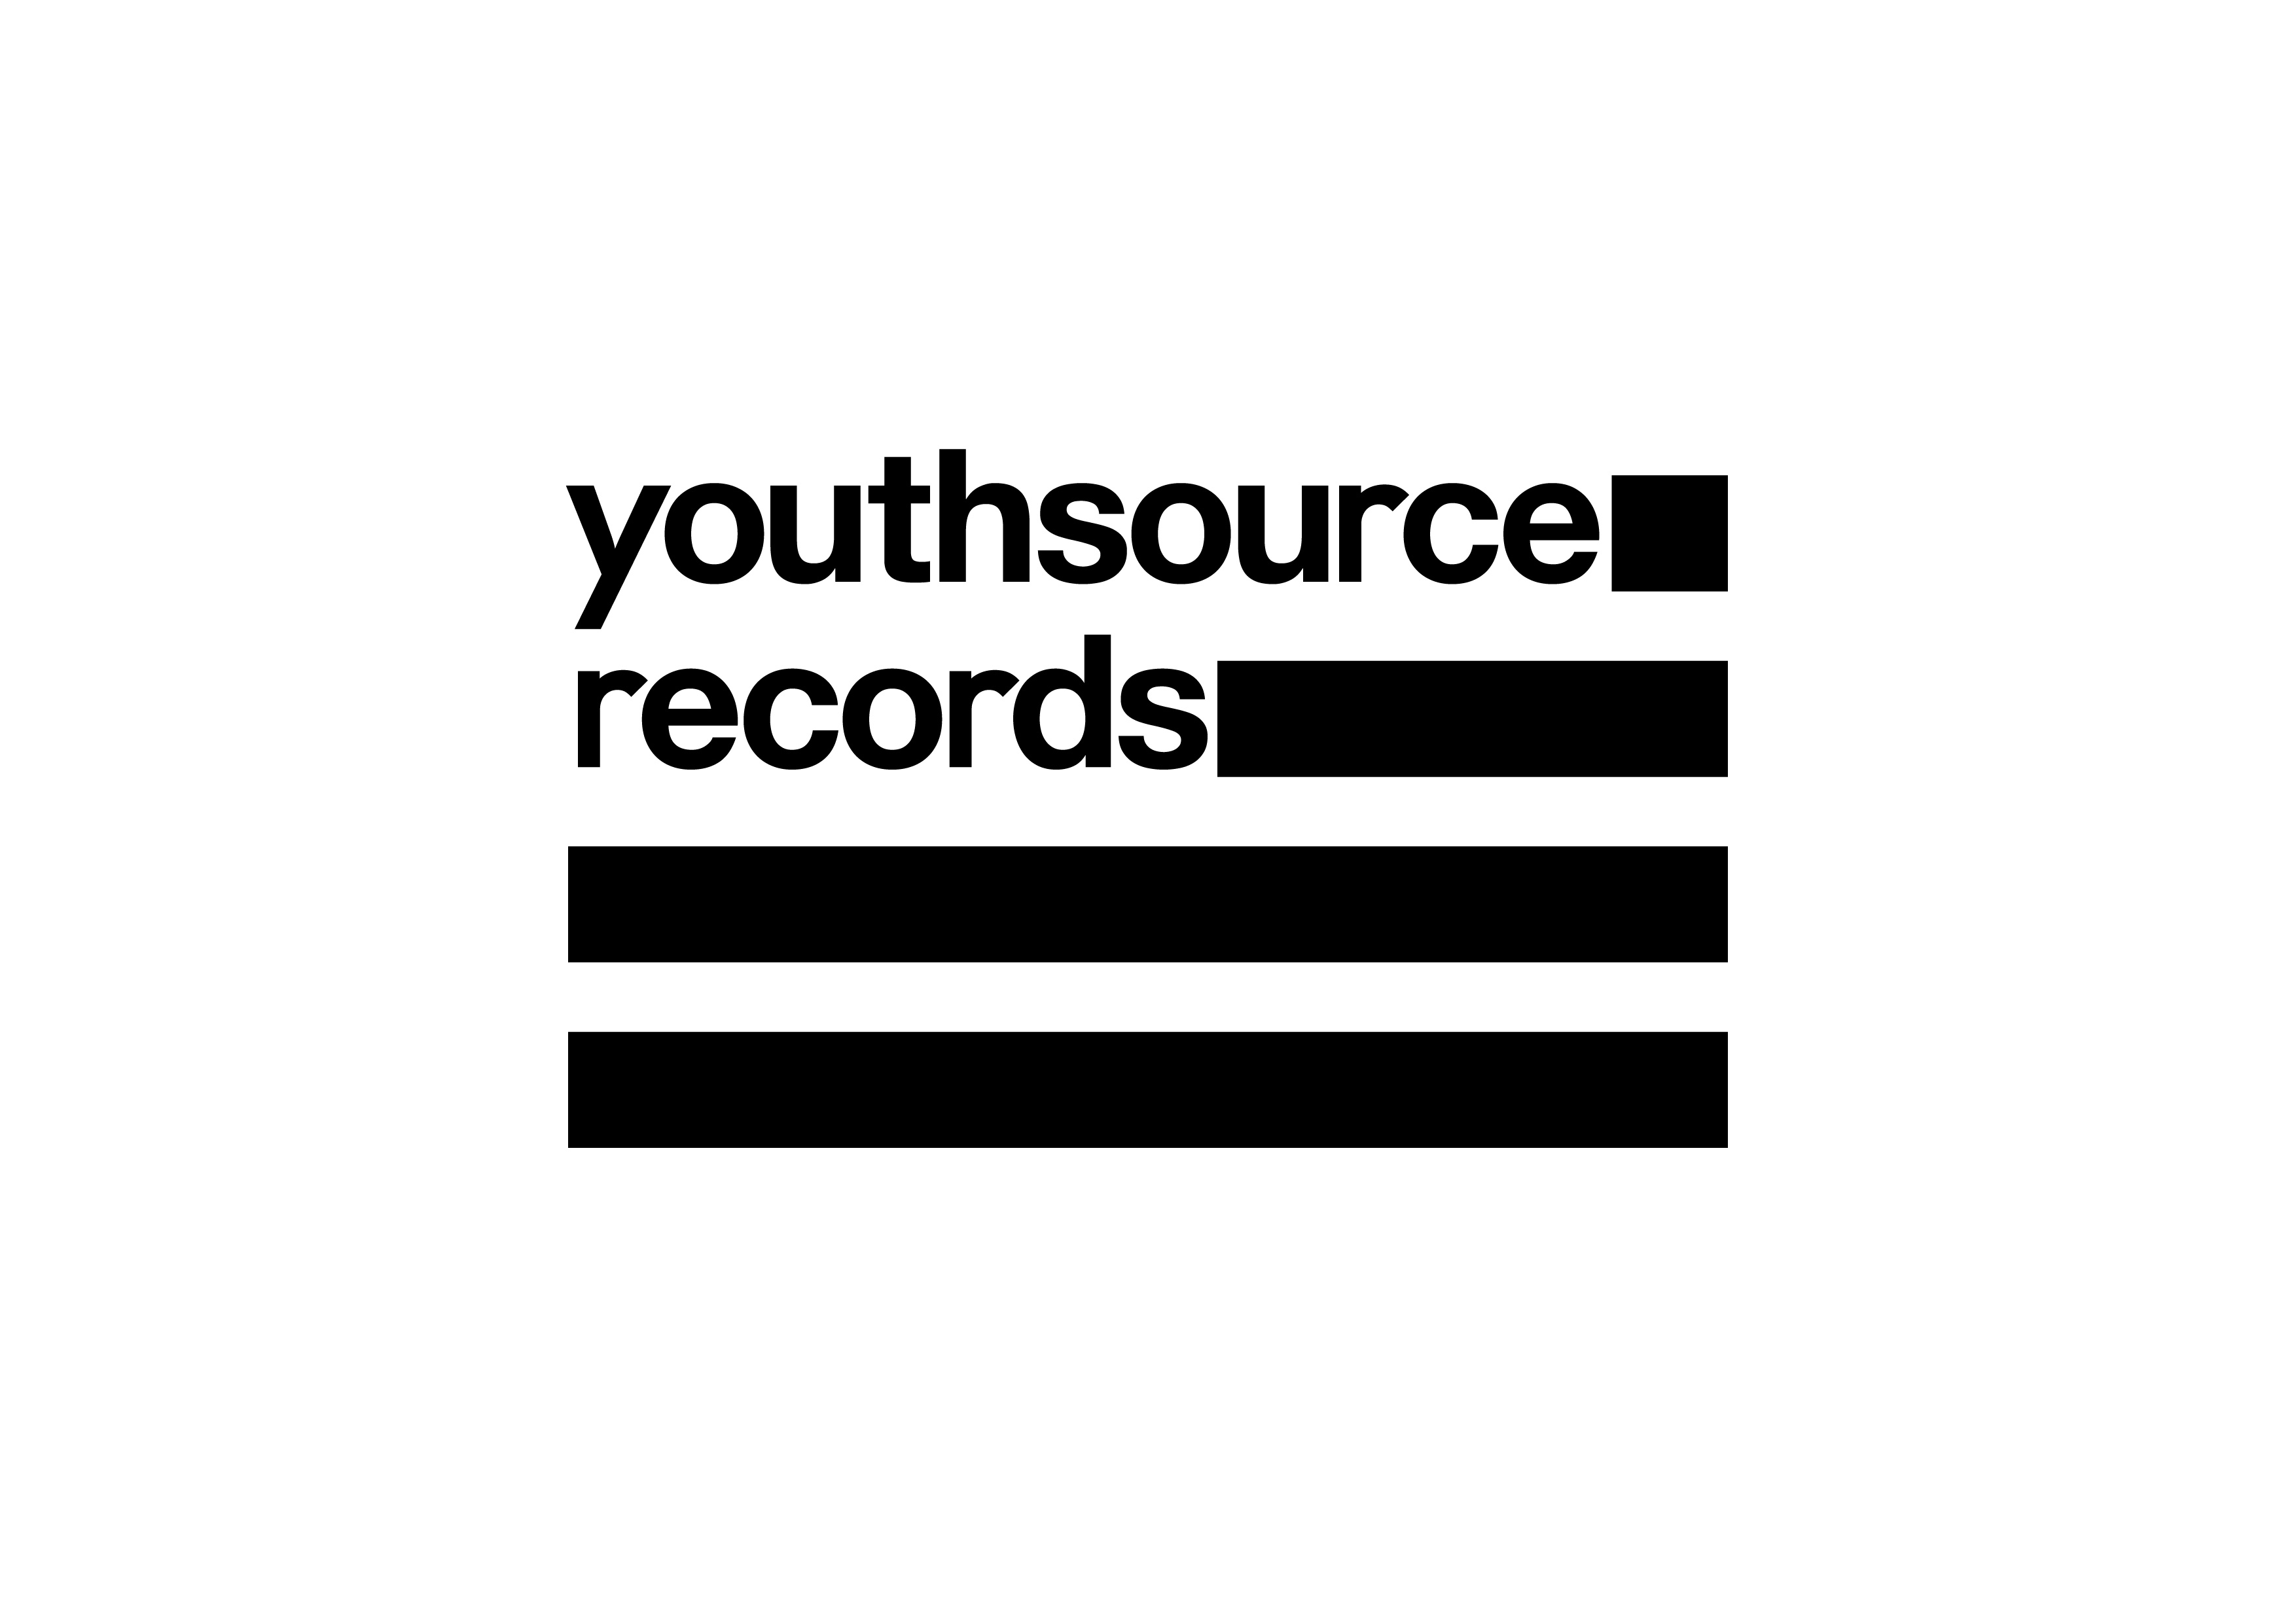 youthsource_logo_black